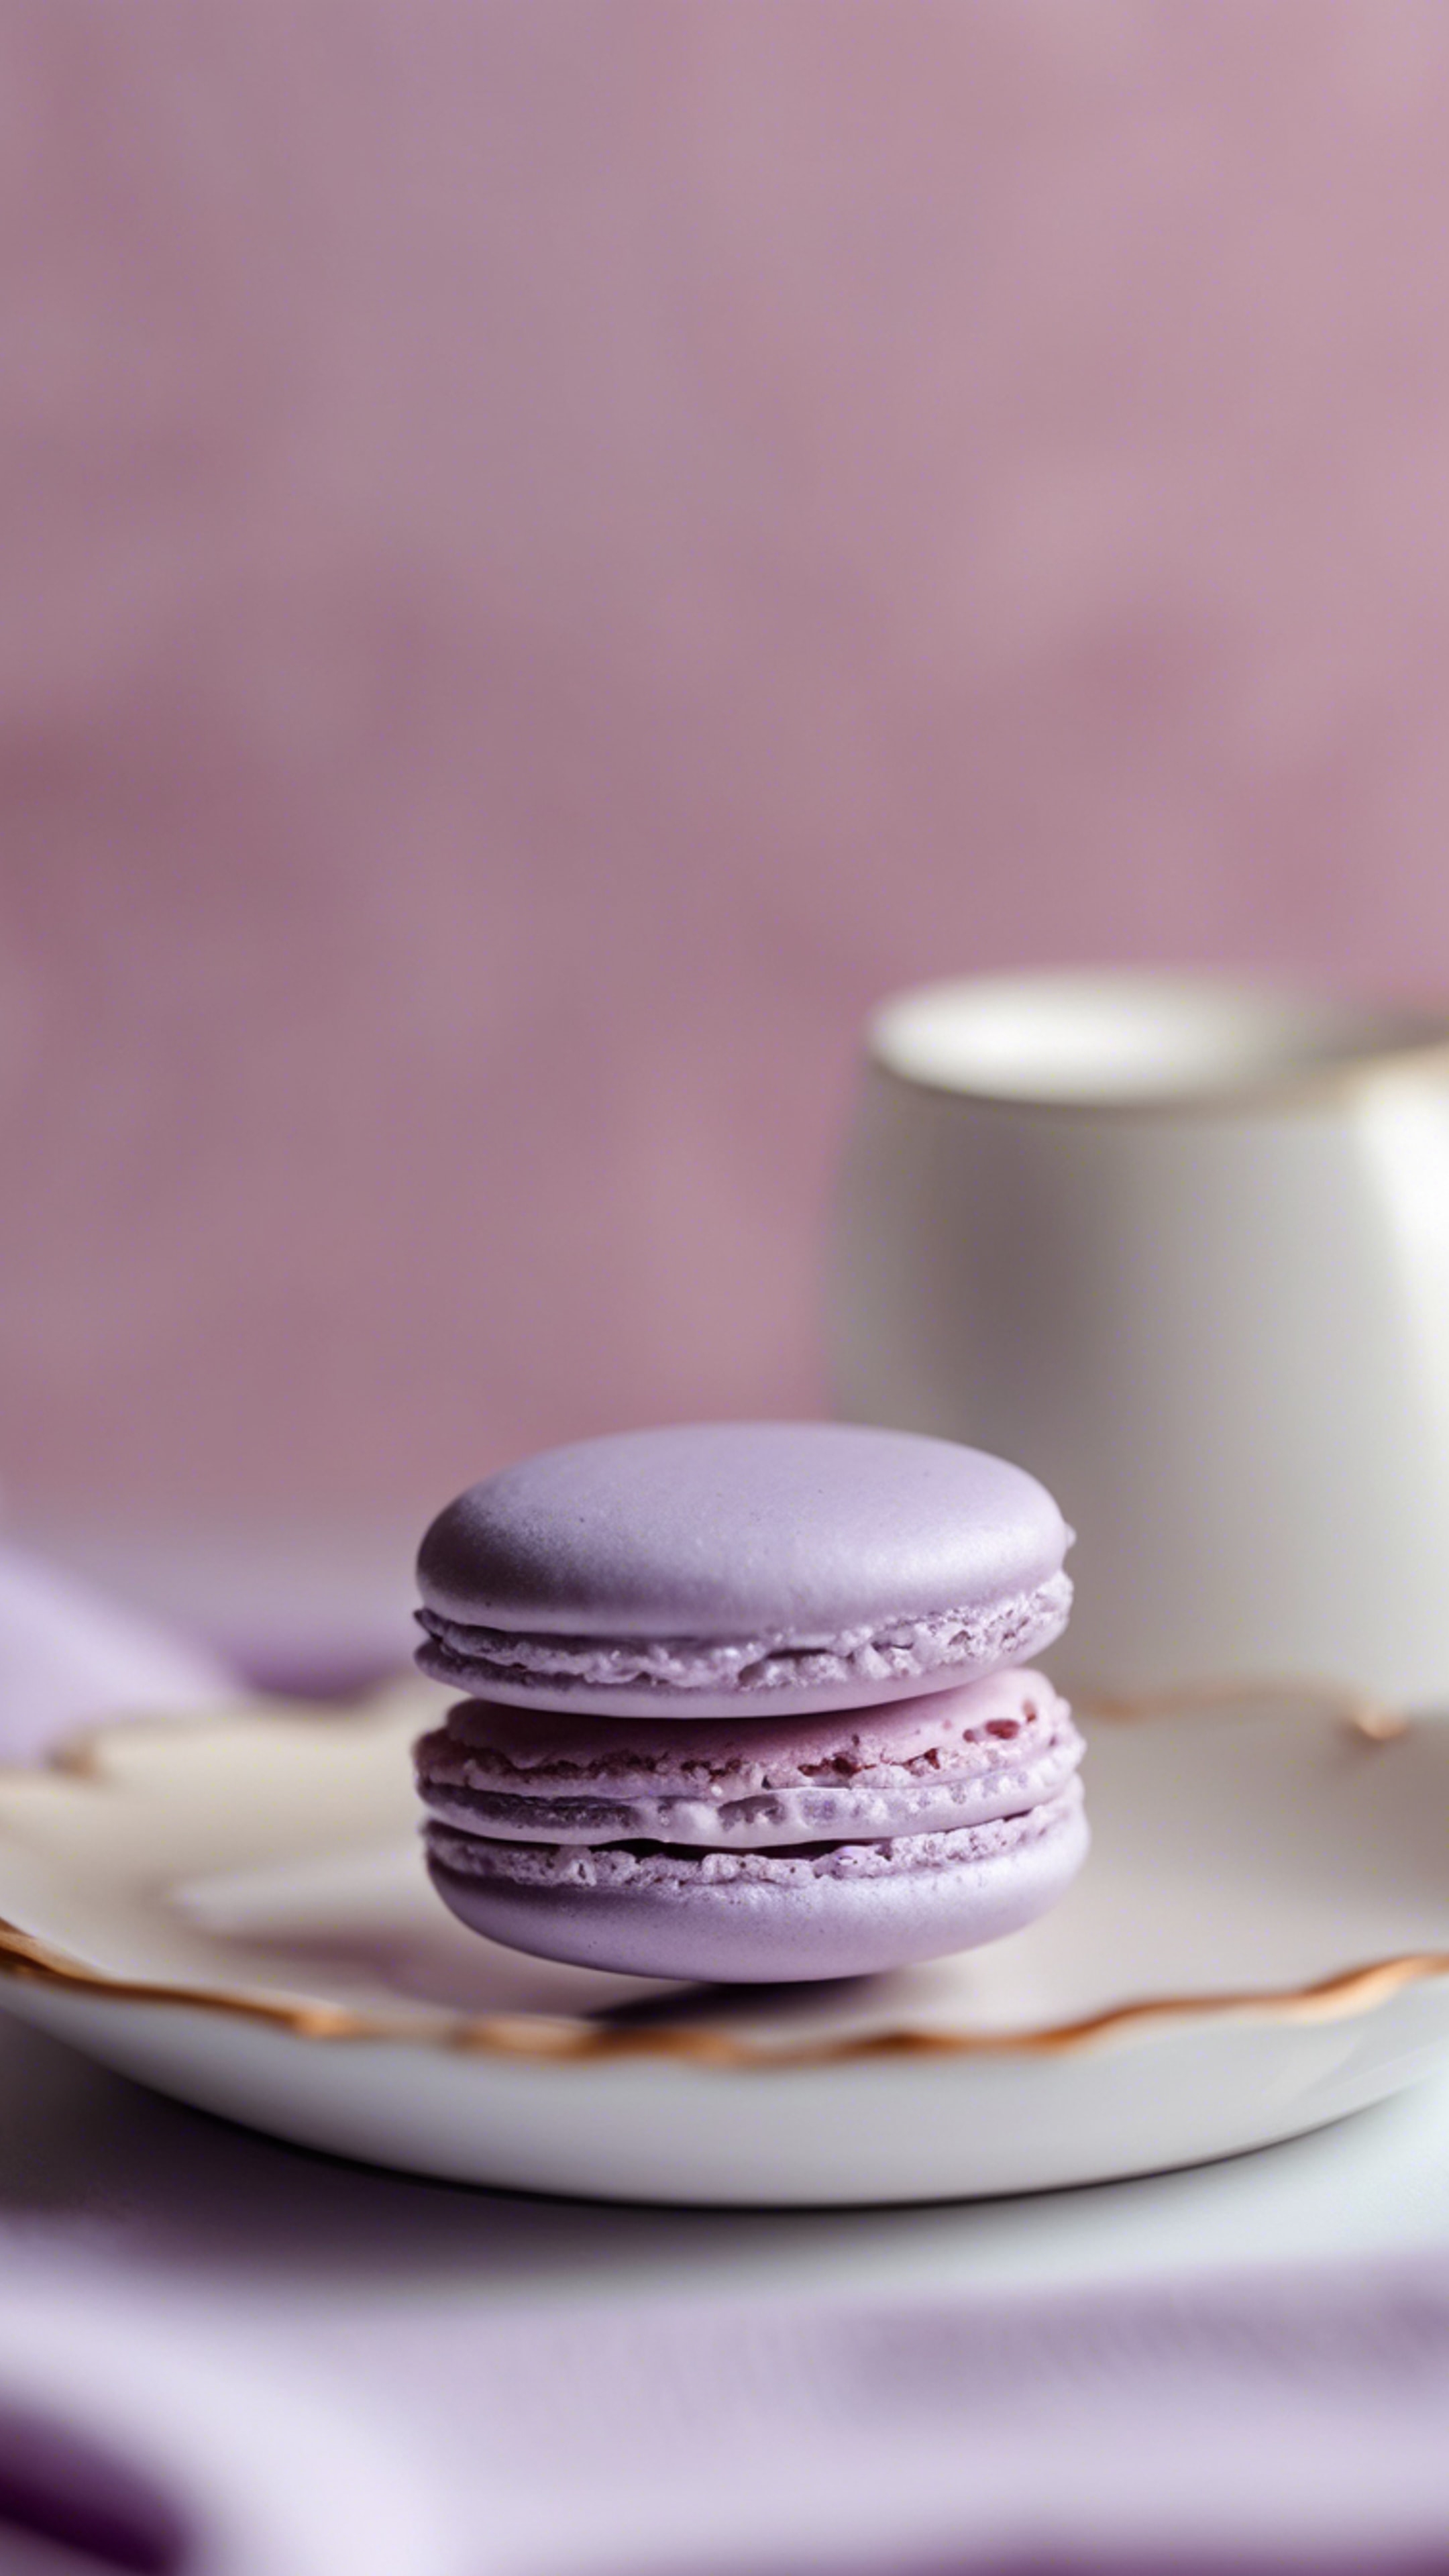 A close-up of a pastel purple-hued french macaron on a white porcelain plate. ផ្ទាំង​រូបភាព[867427dfb4584ec3b53c]